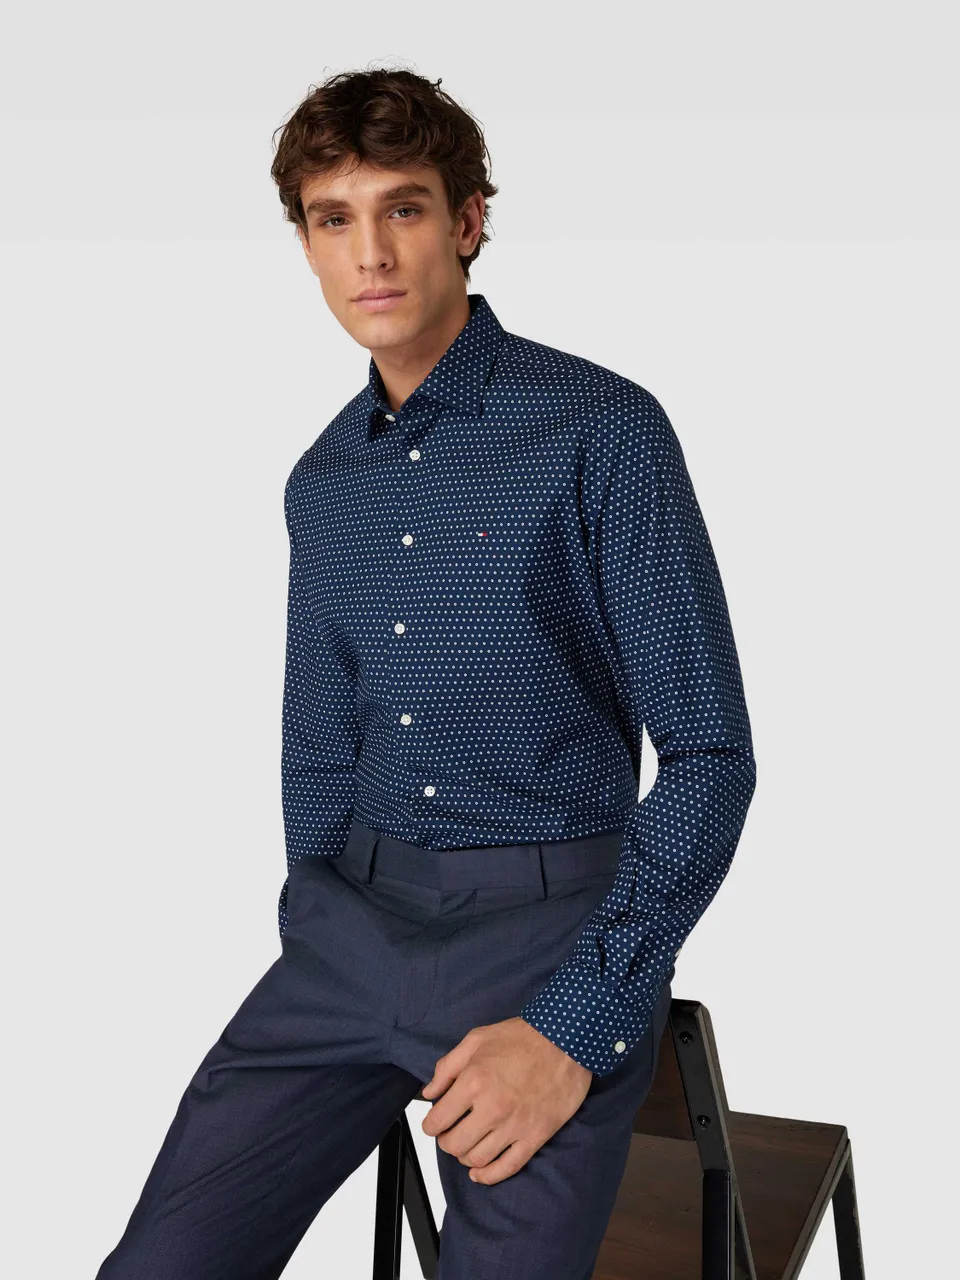 Regular Fit Business-Hemd mit Allover-Muster